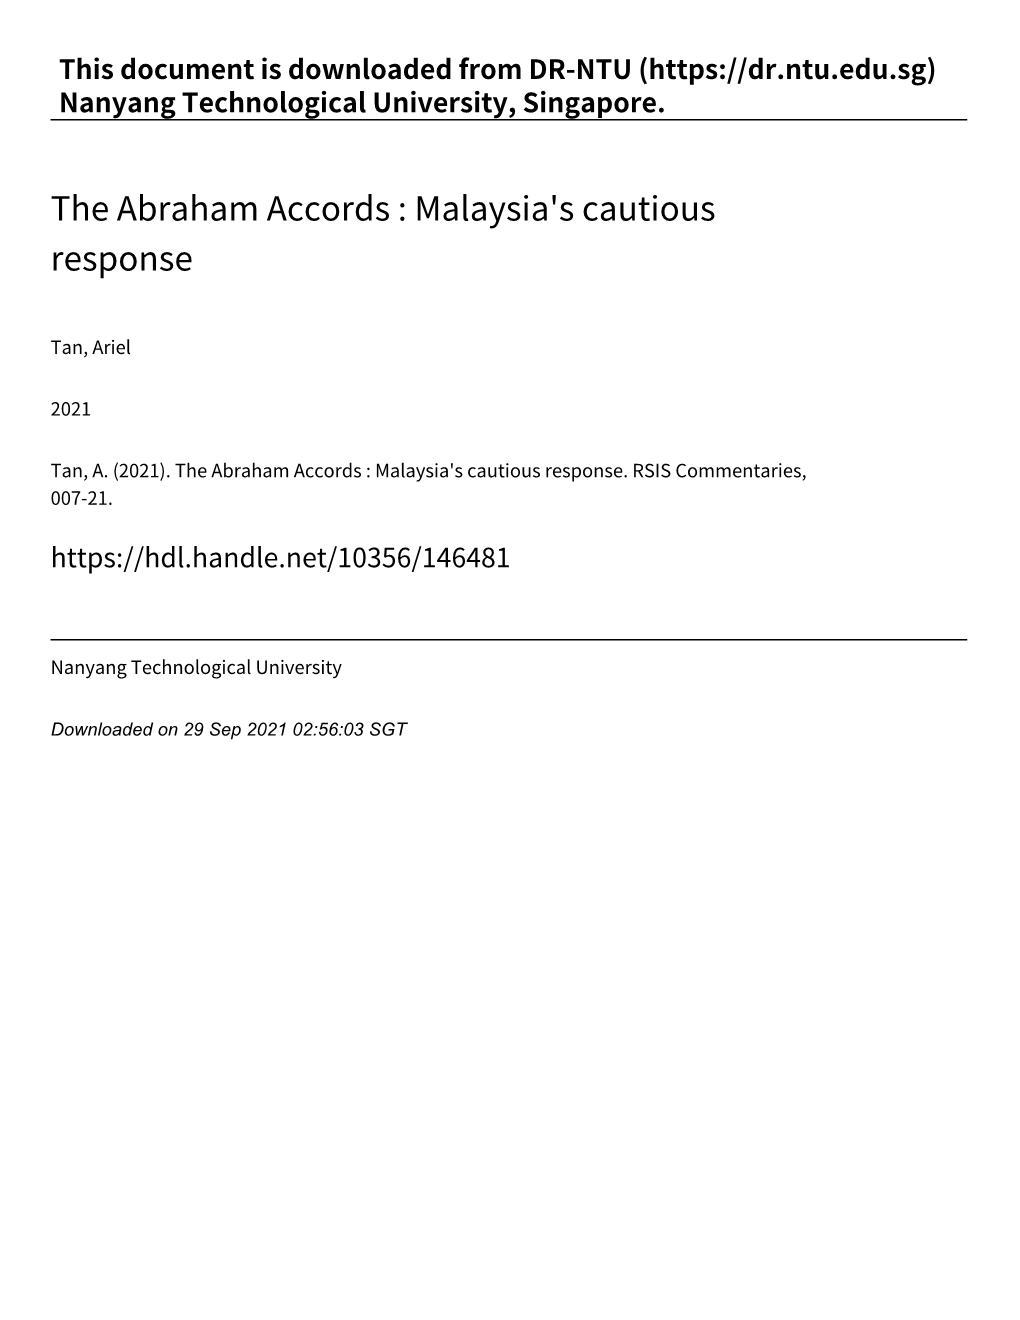 The Abraham Accords : Malaysia's Cautious Response